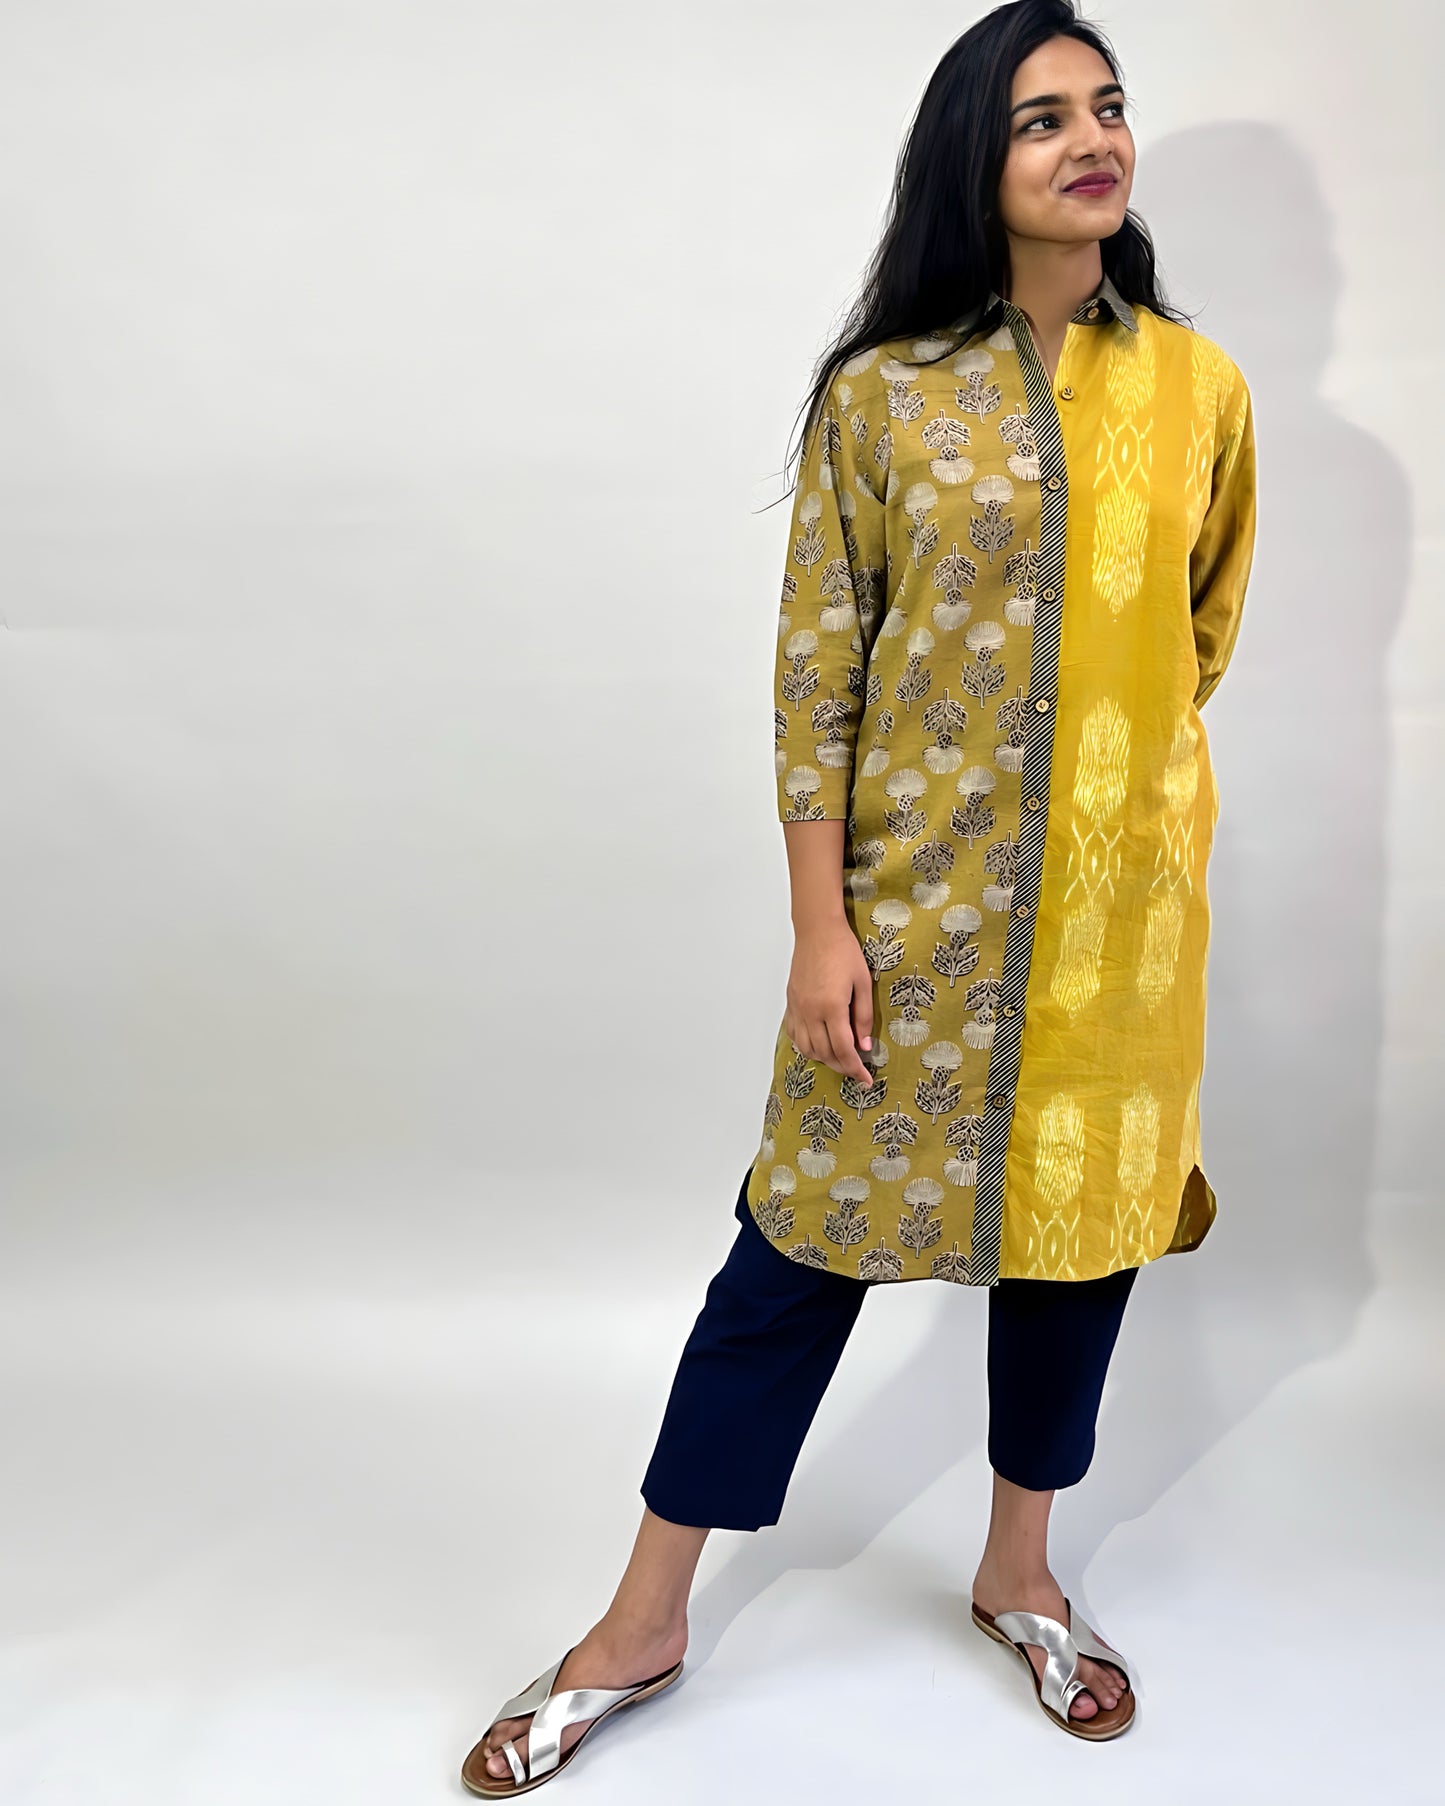 Shirt Dress - Canary Ikat/Mustard Block Print with Stripes